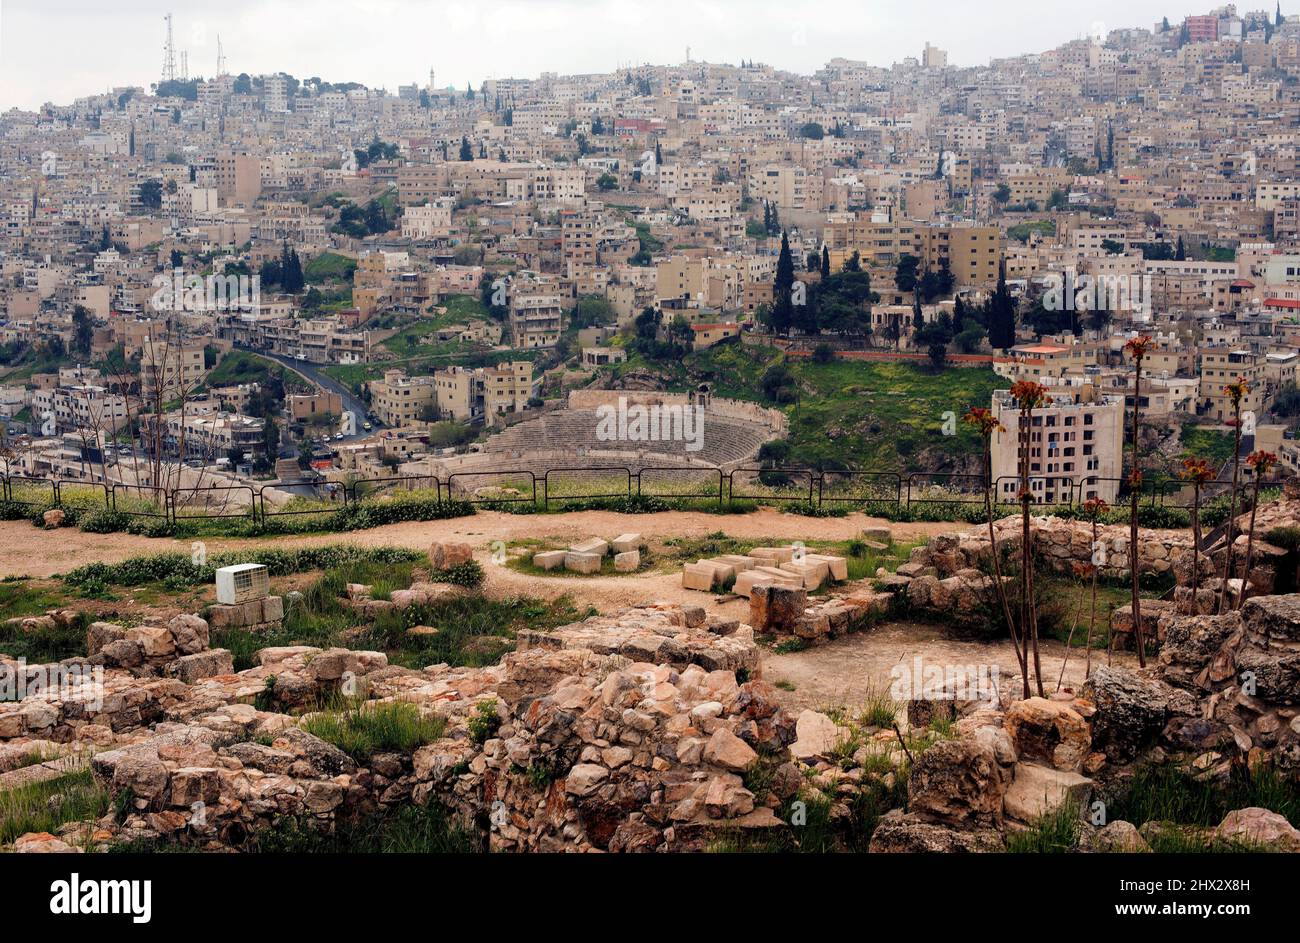 Amman (Jordan capital), panoramic view from Citadel with remains. Stock Photo